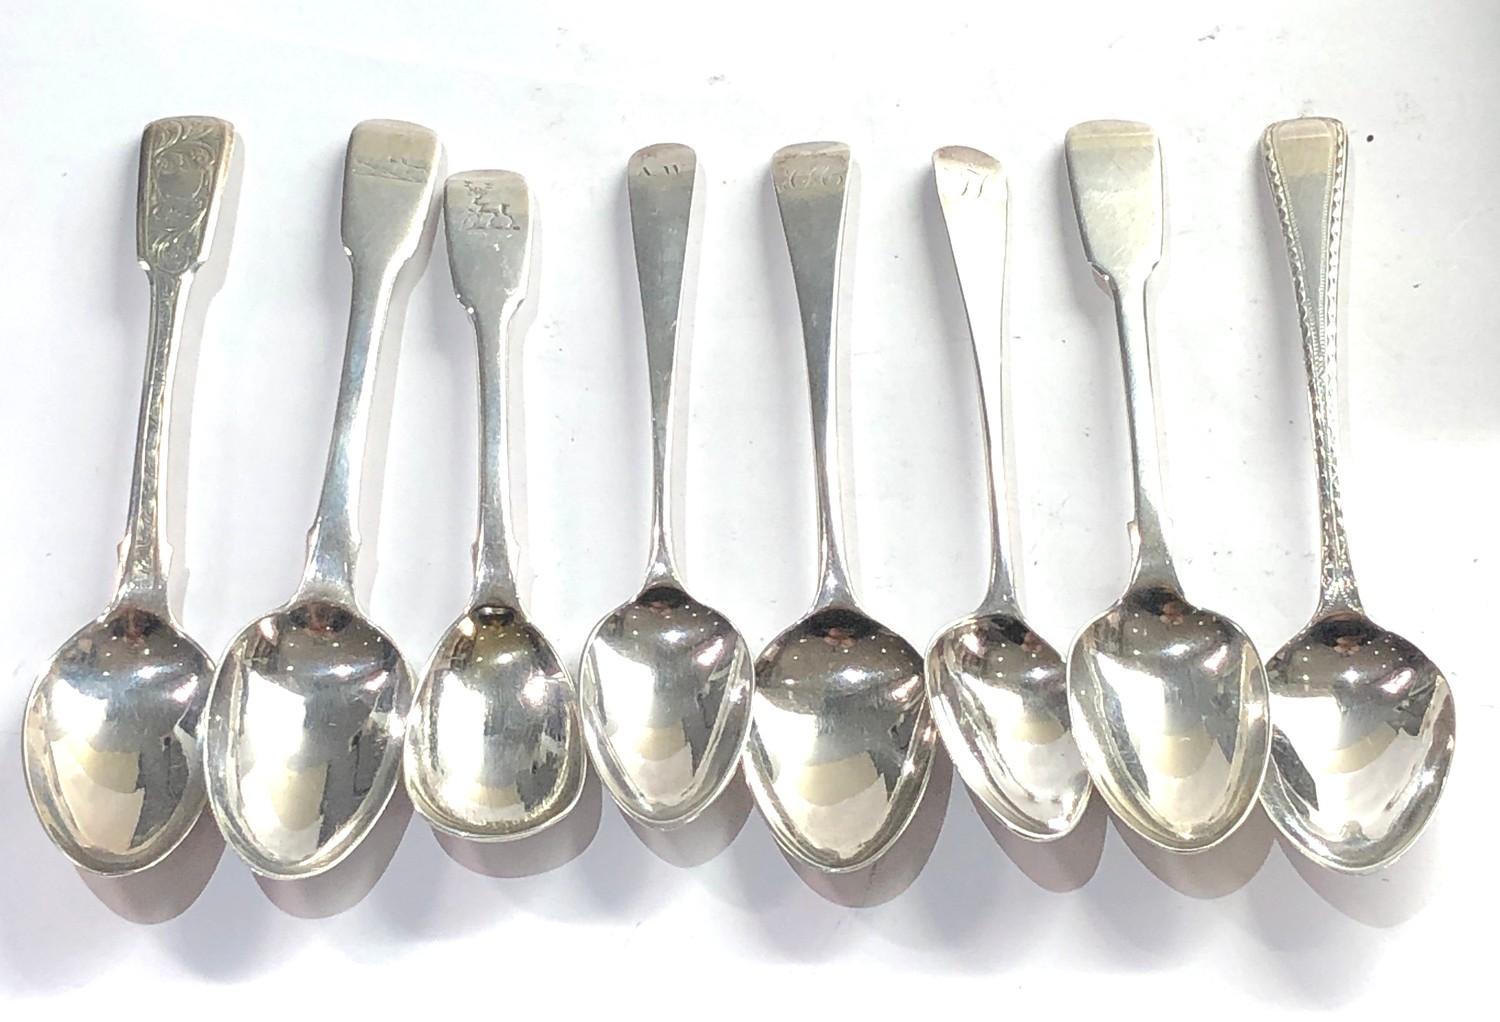 Antique silver tea spoons 133g